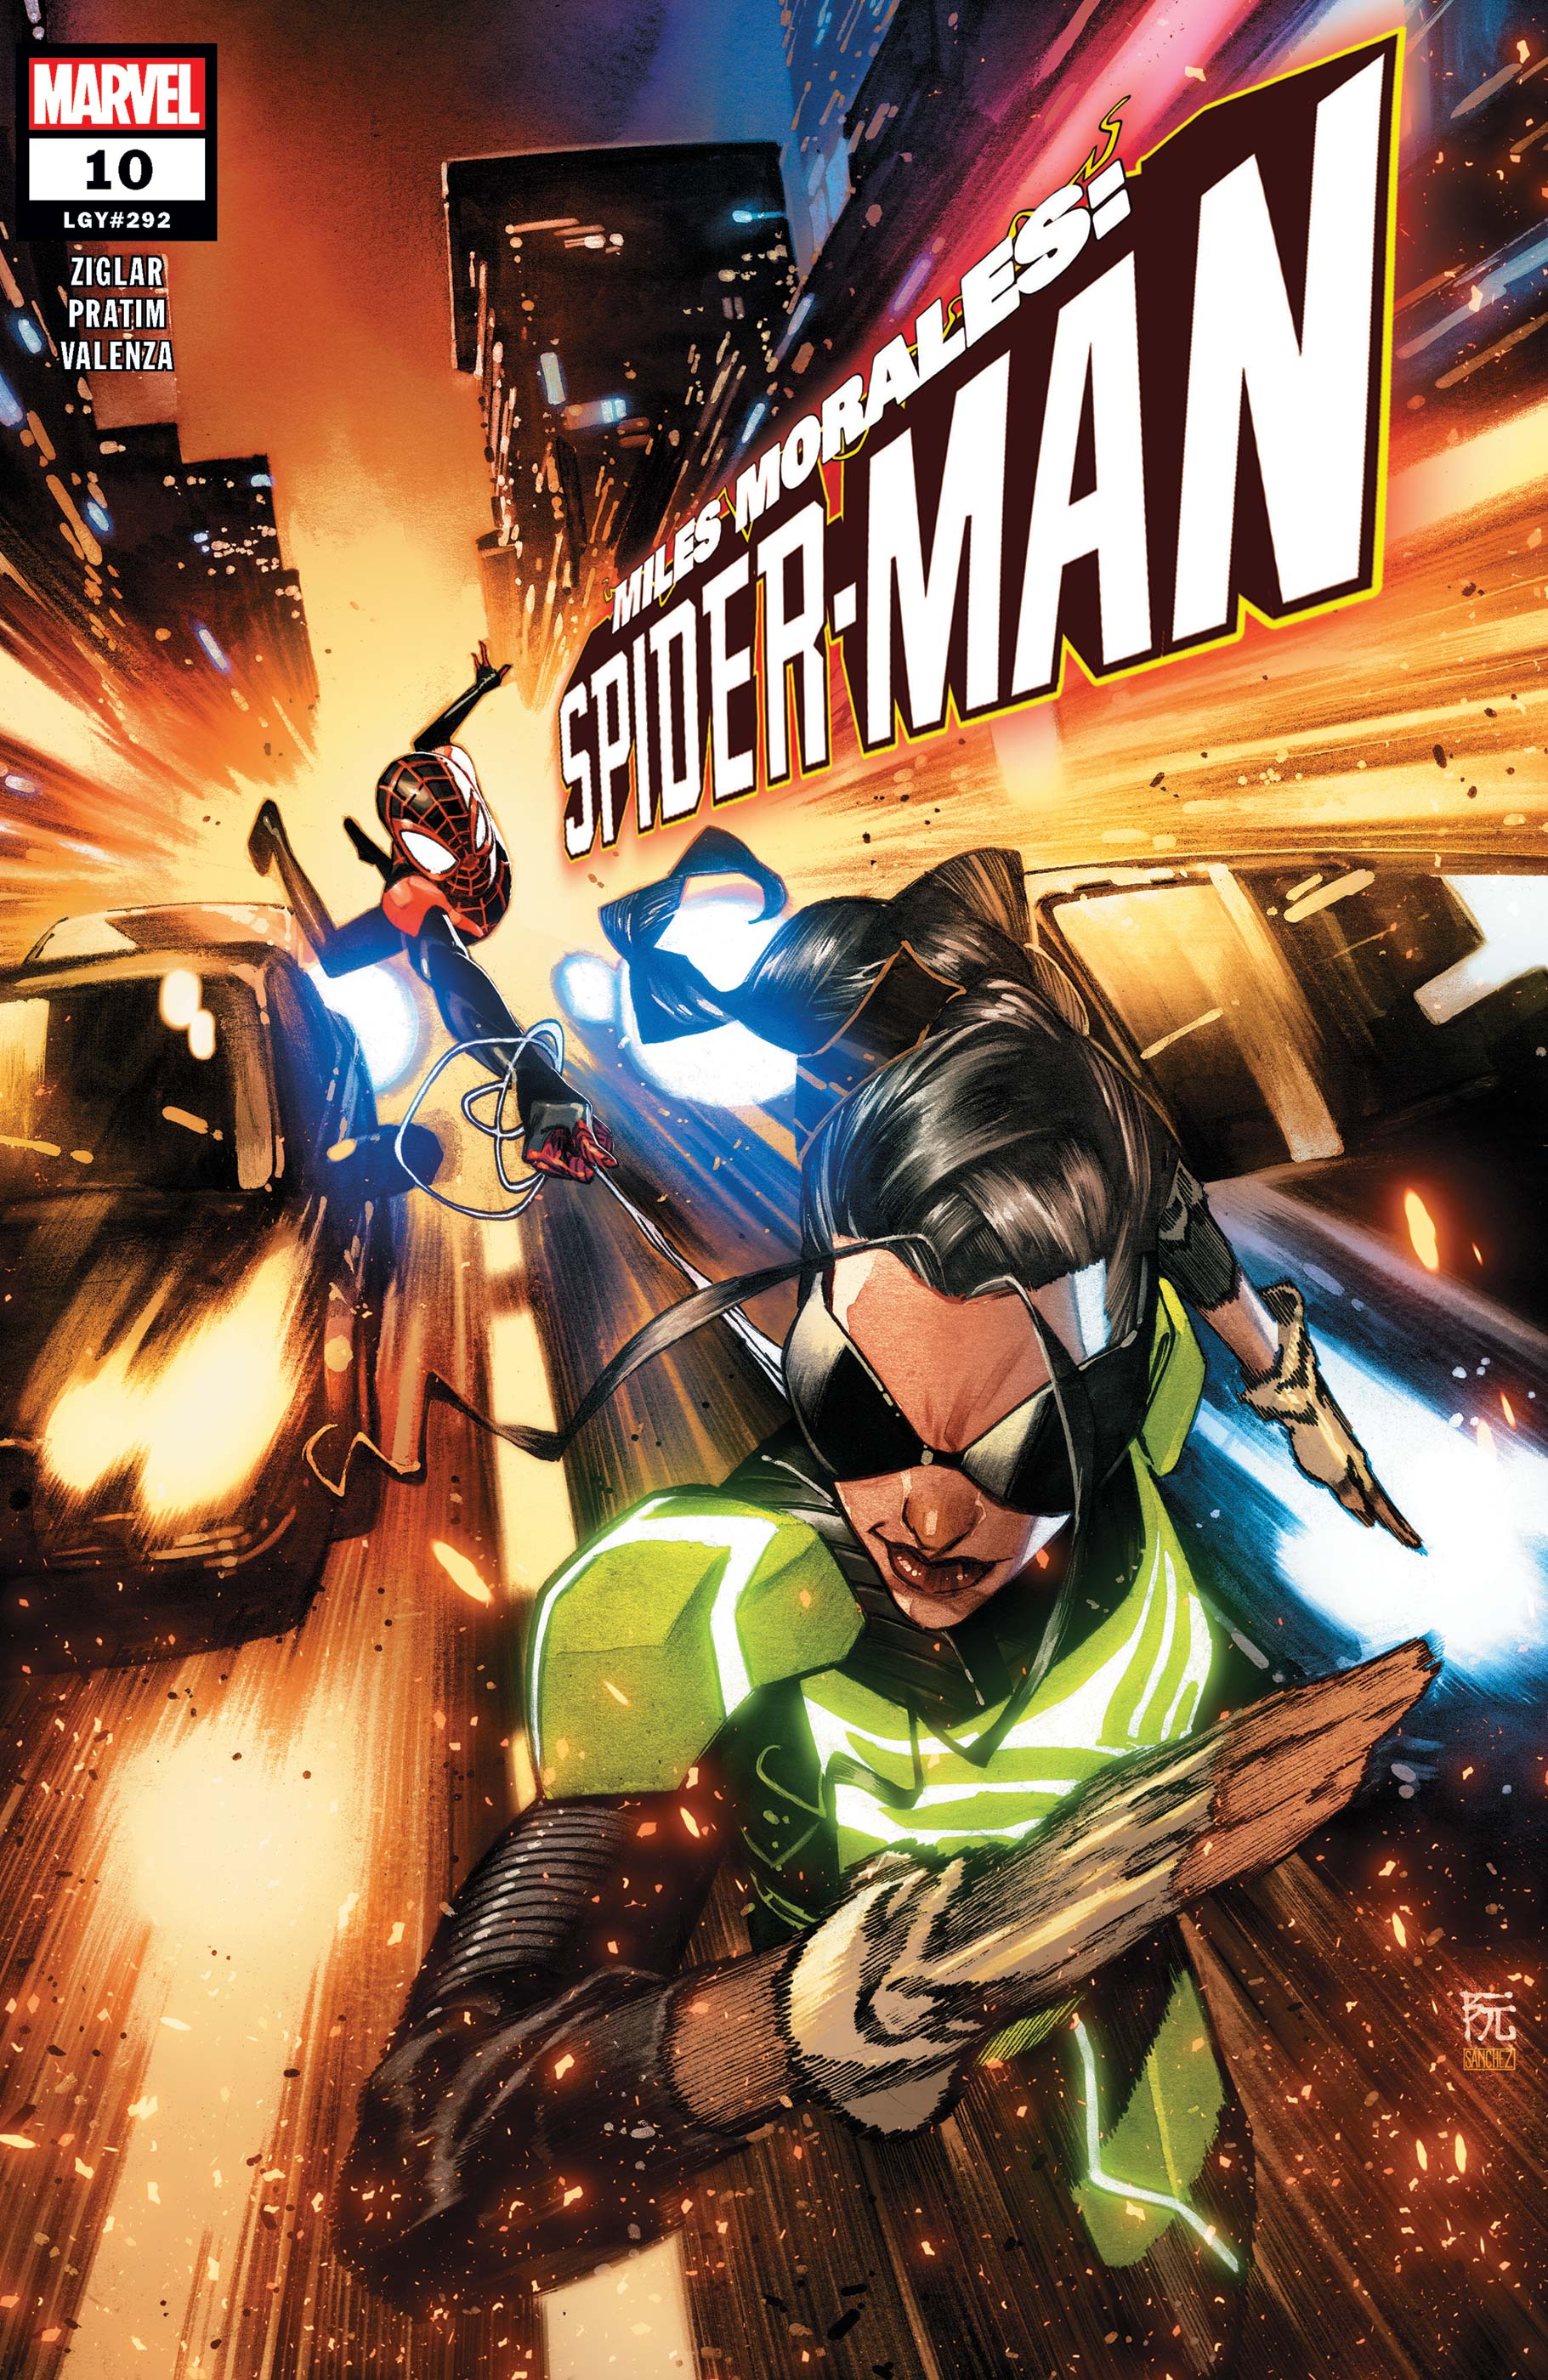 Miles Morales: Spider-Man (2022) #10